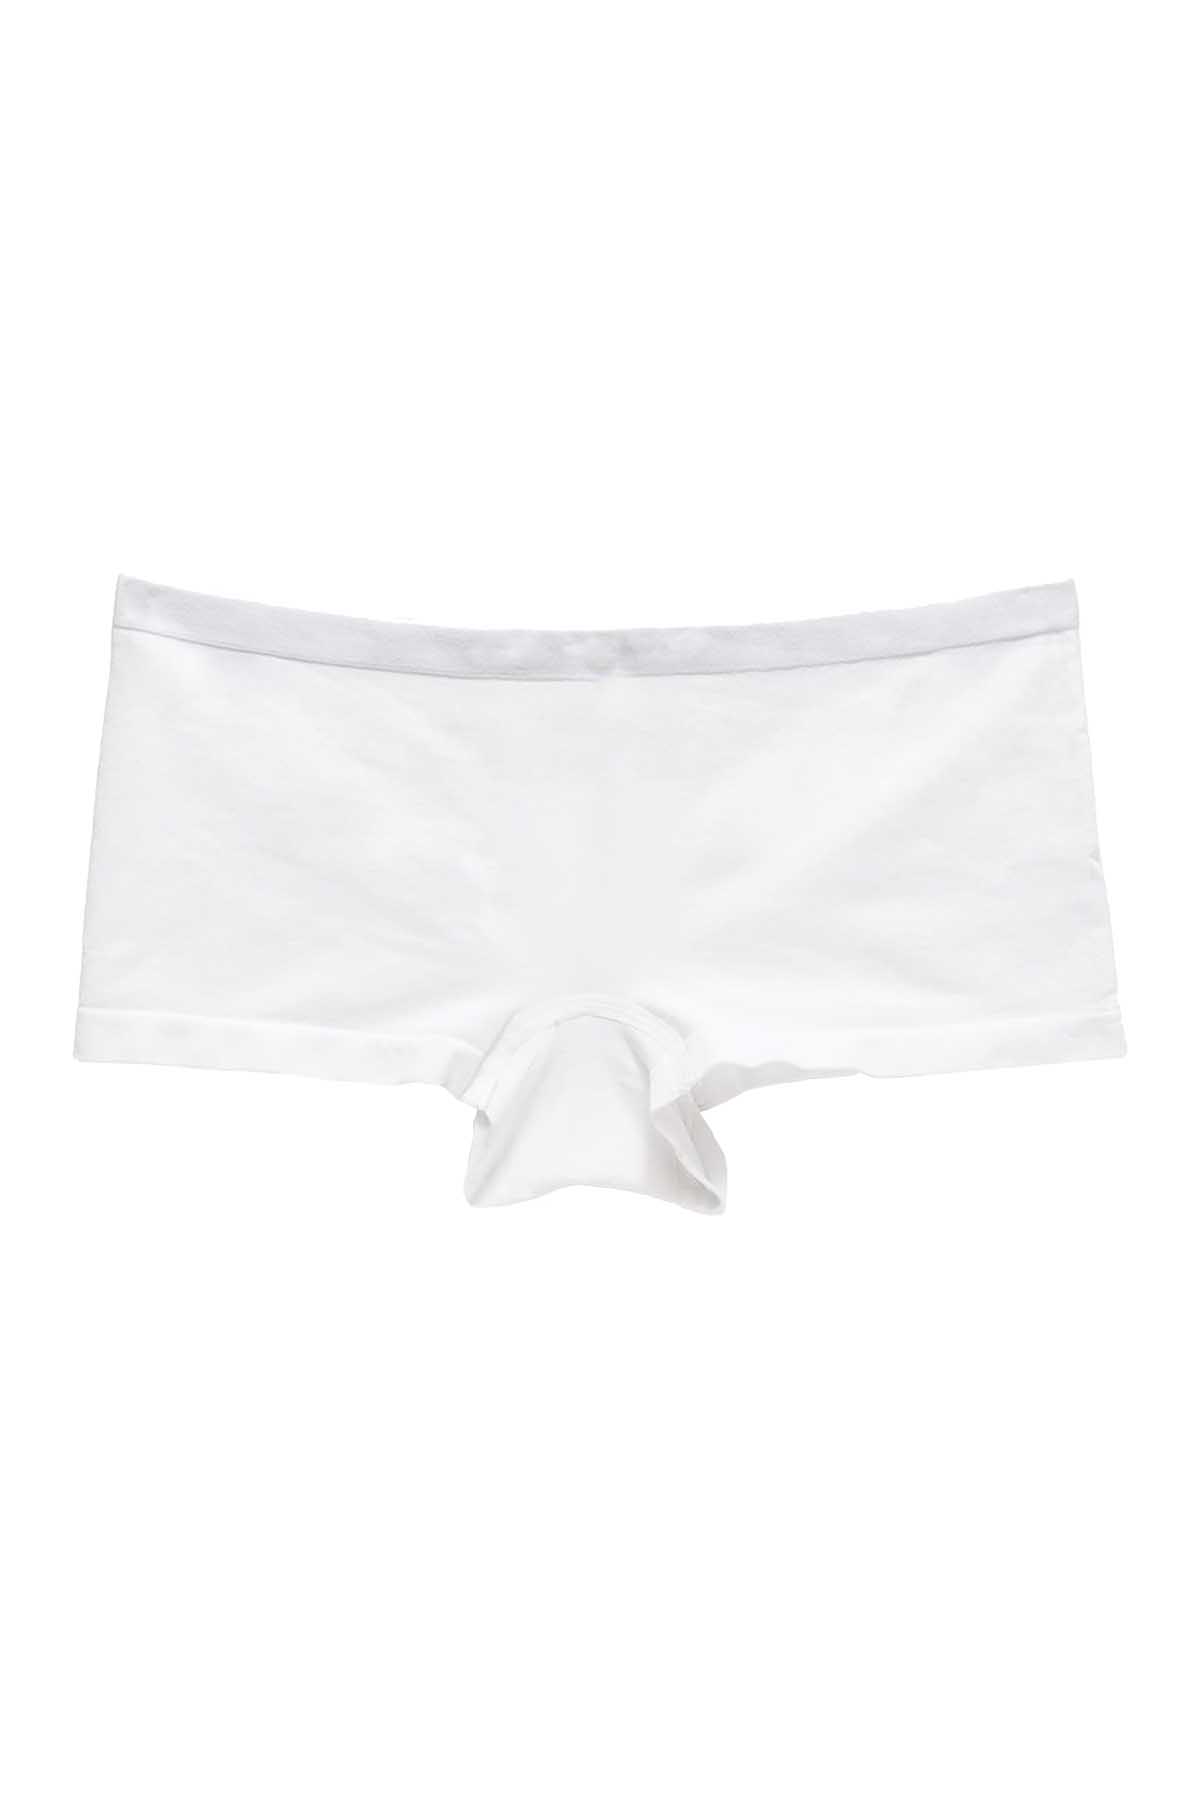 Calvin Klein Women's Pure Ribbed Boyshort Panty, White, X-Small at